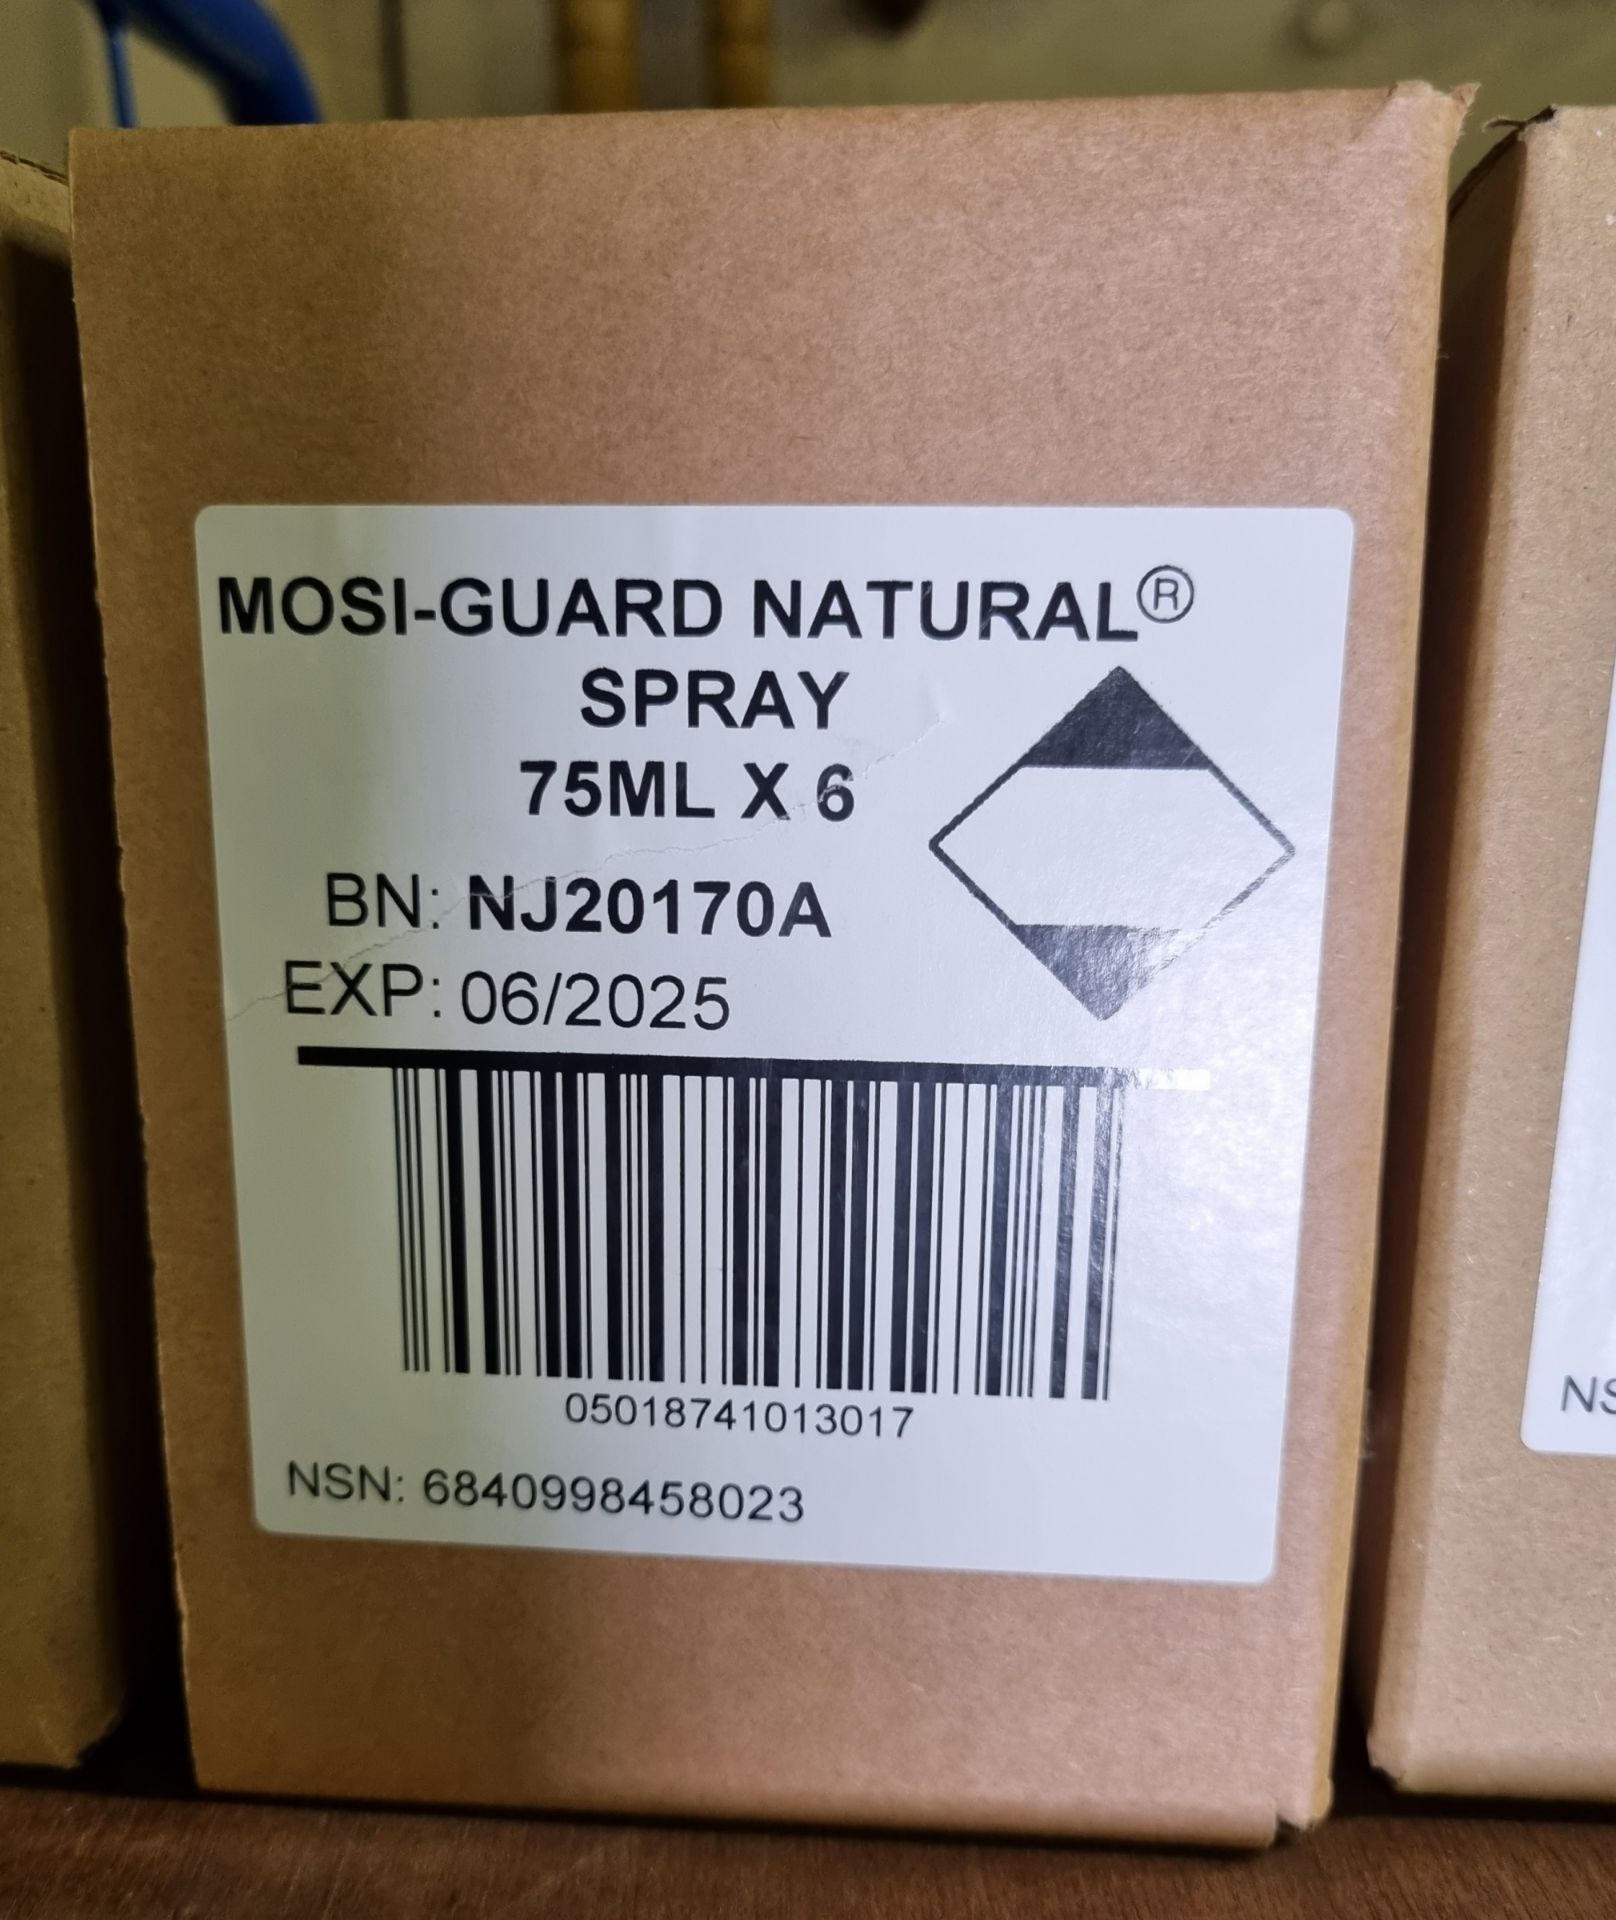 32x boxes of Mosi-Guard Natural Spray - 6x 75ml bottles per box - Image 2 of 5